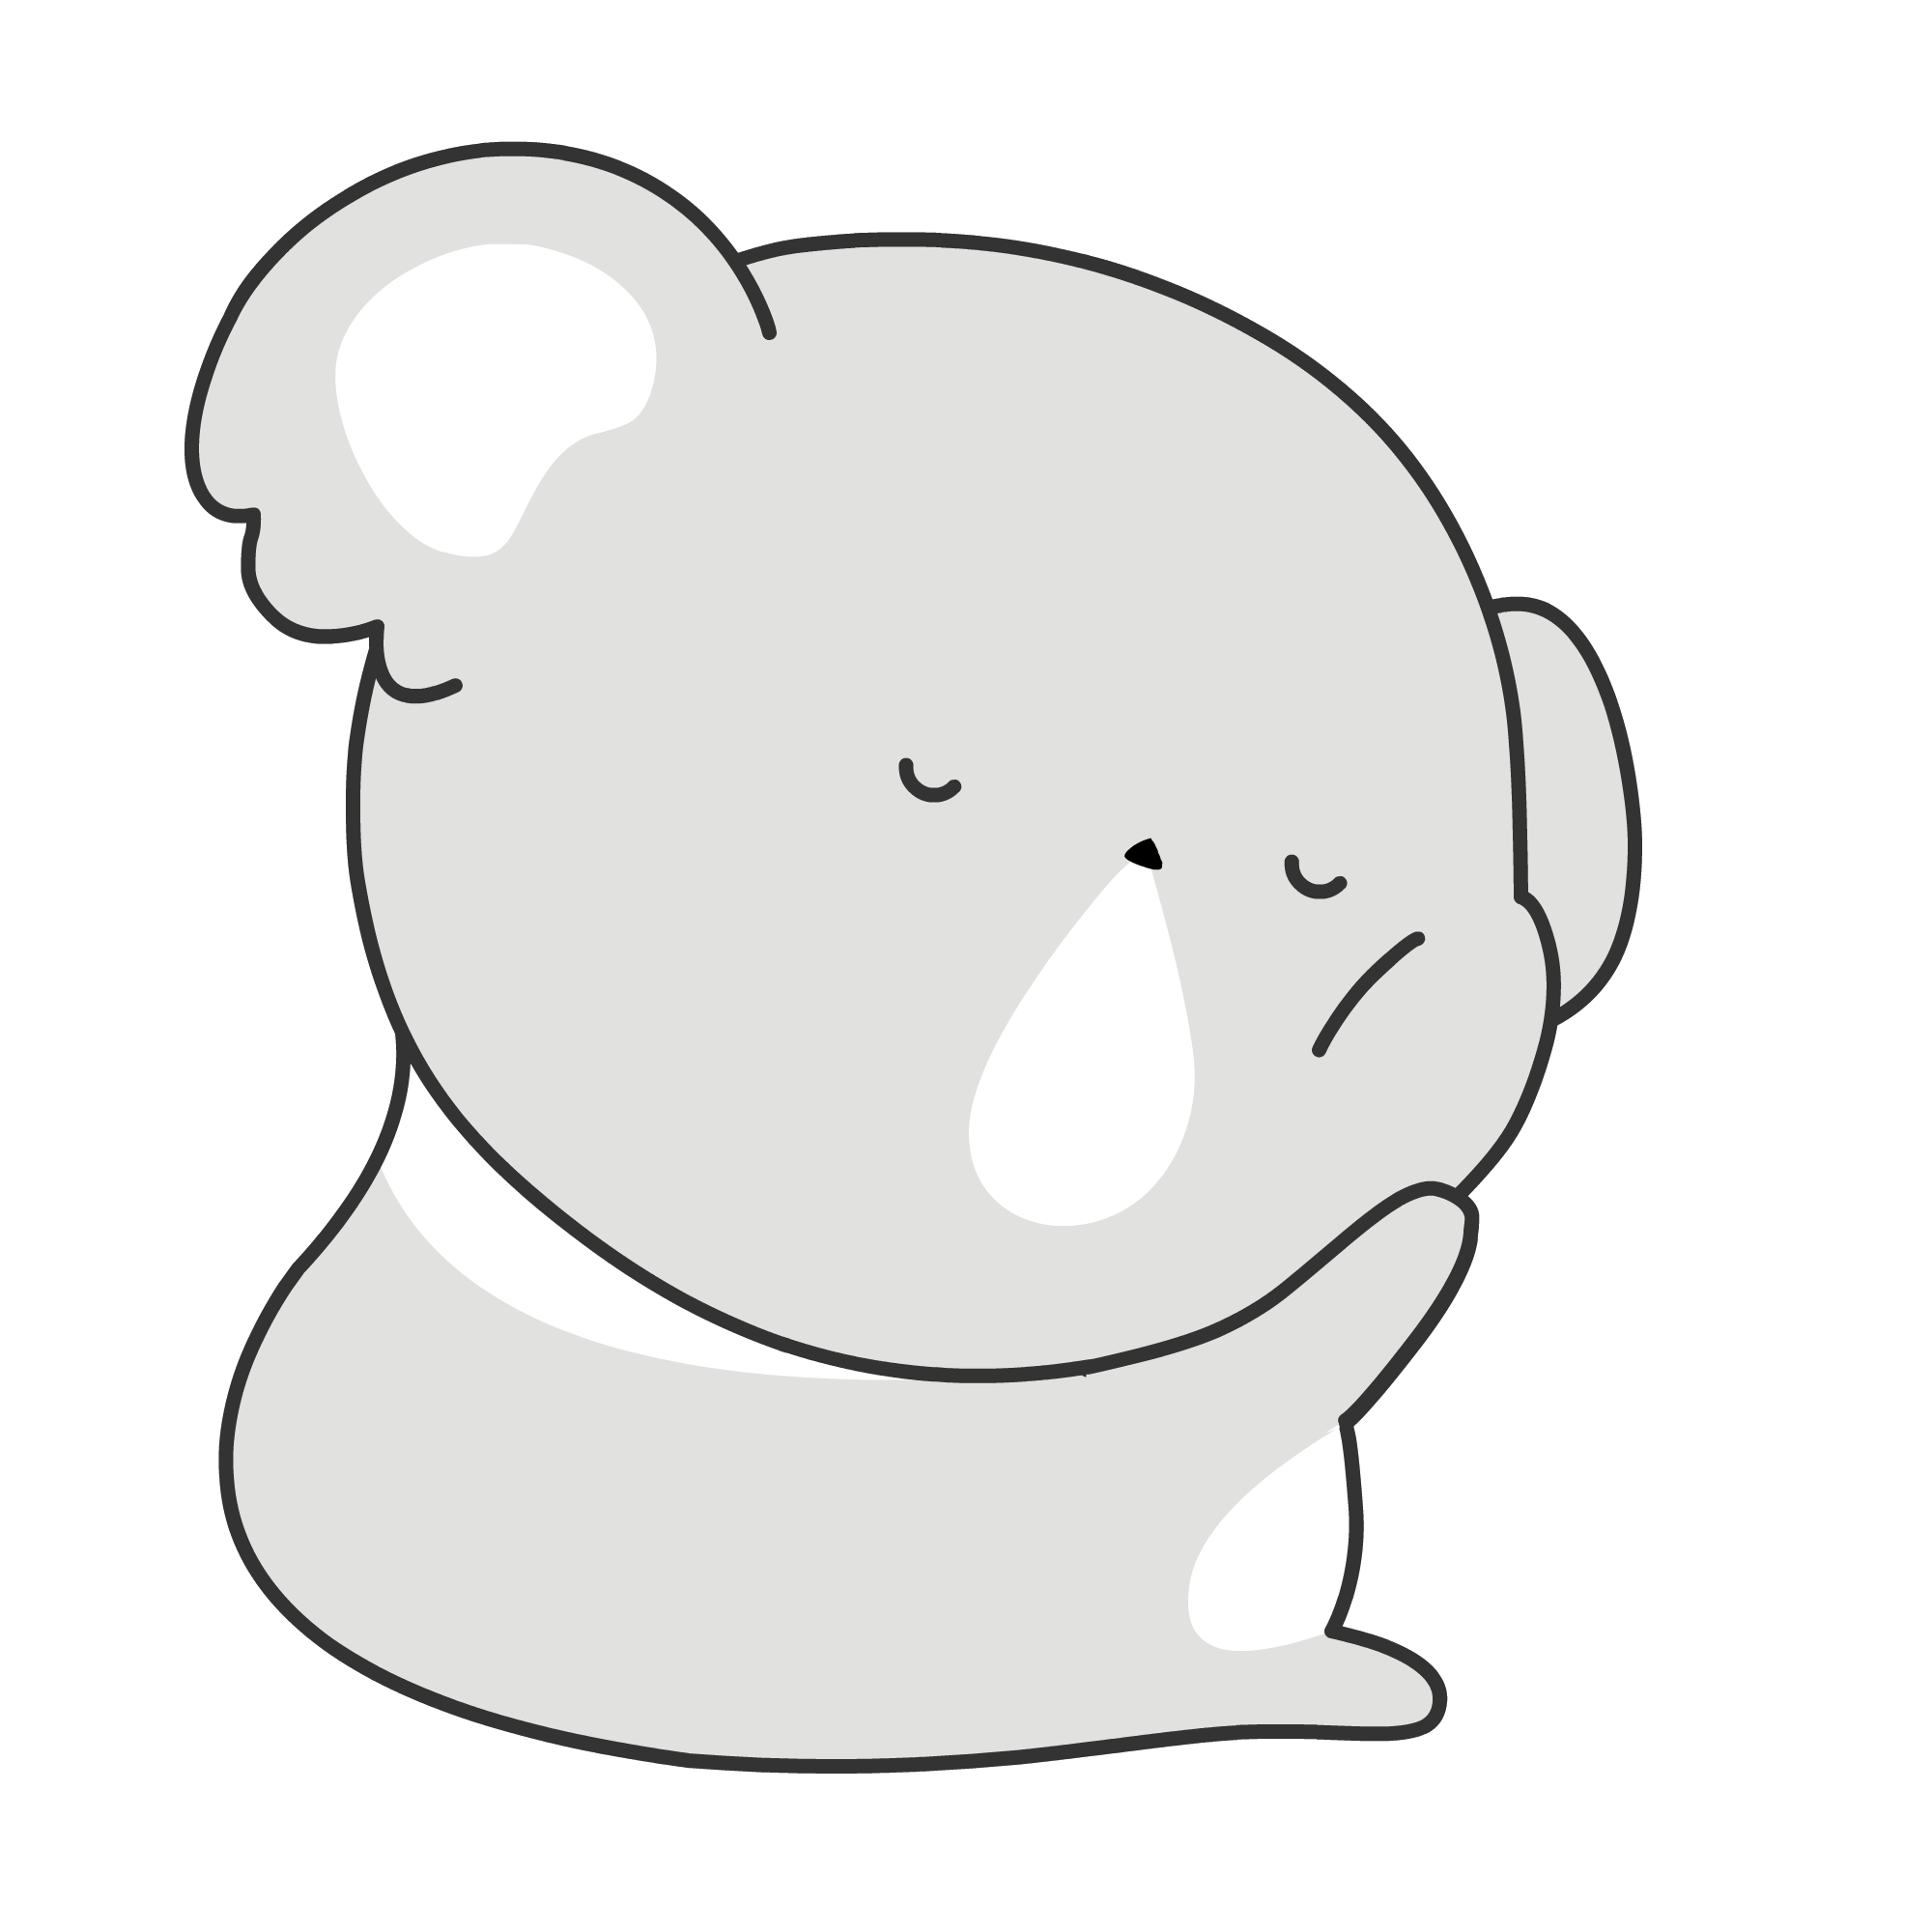 Luna Koala GIFs on GIPHY - Be Animated